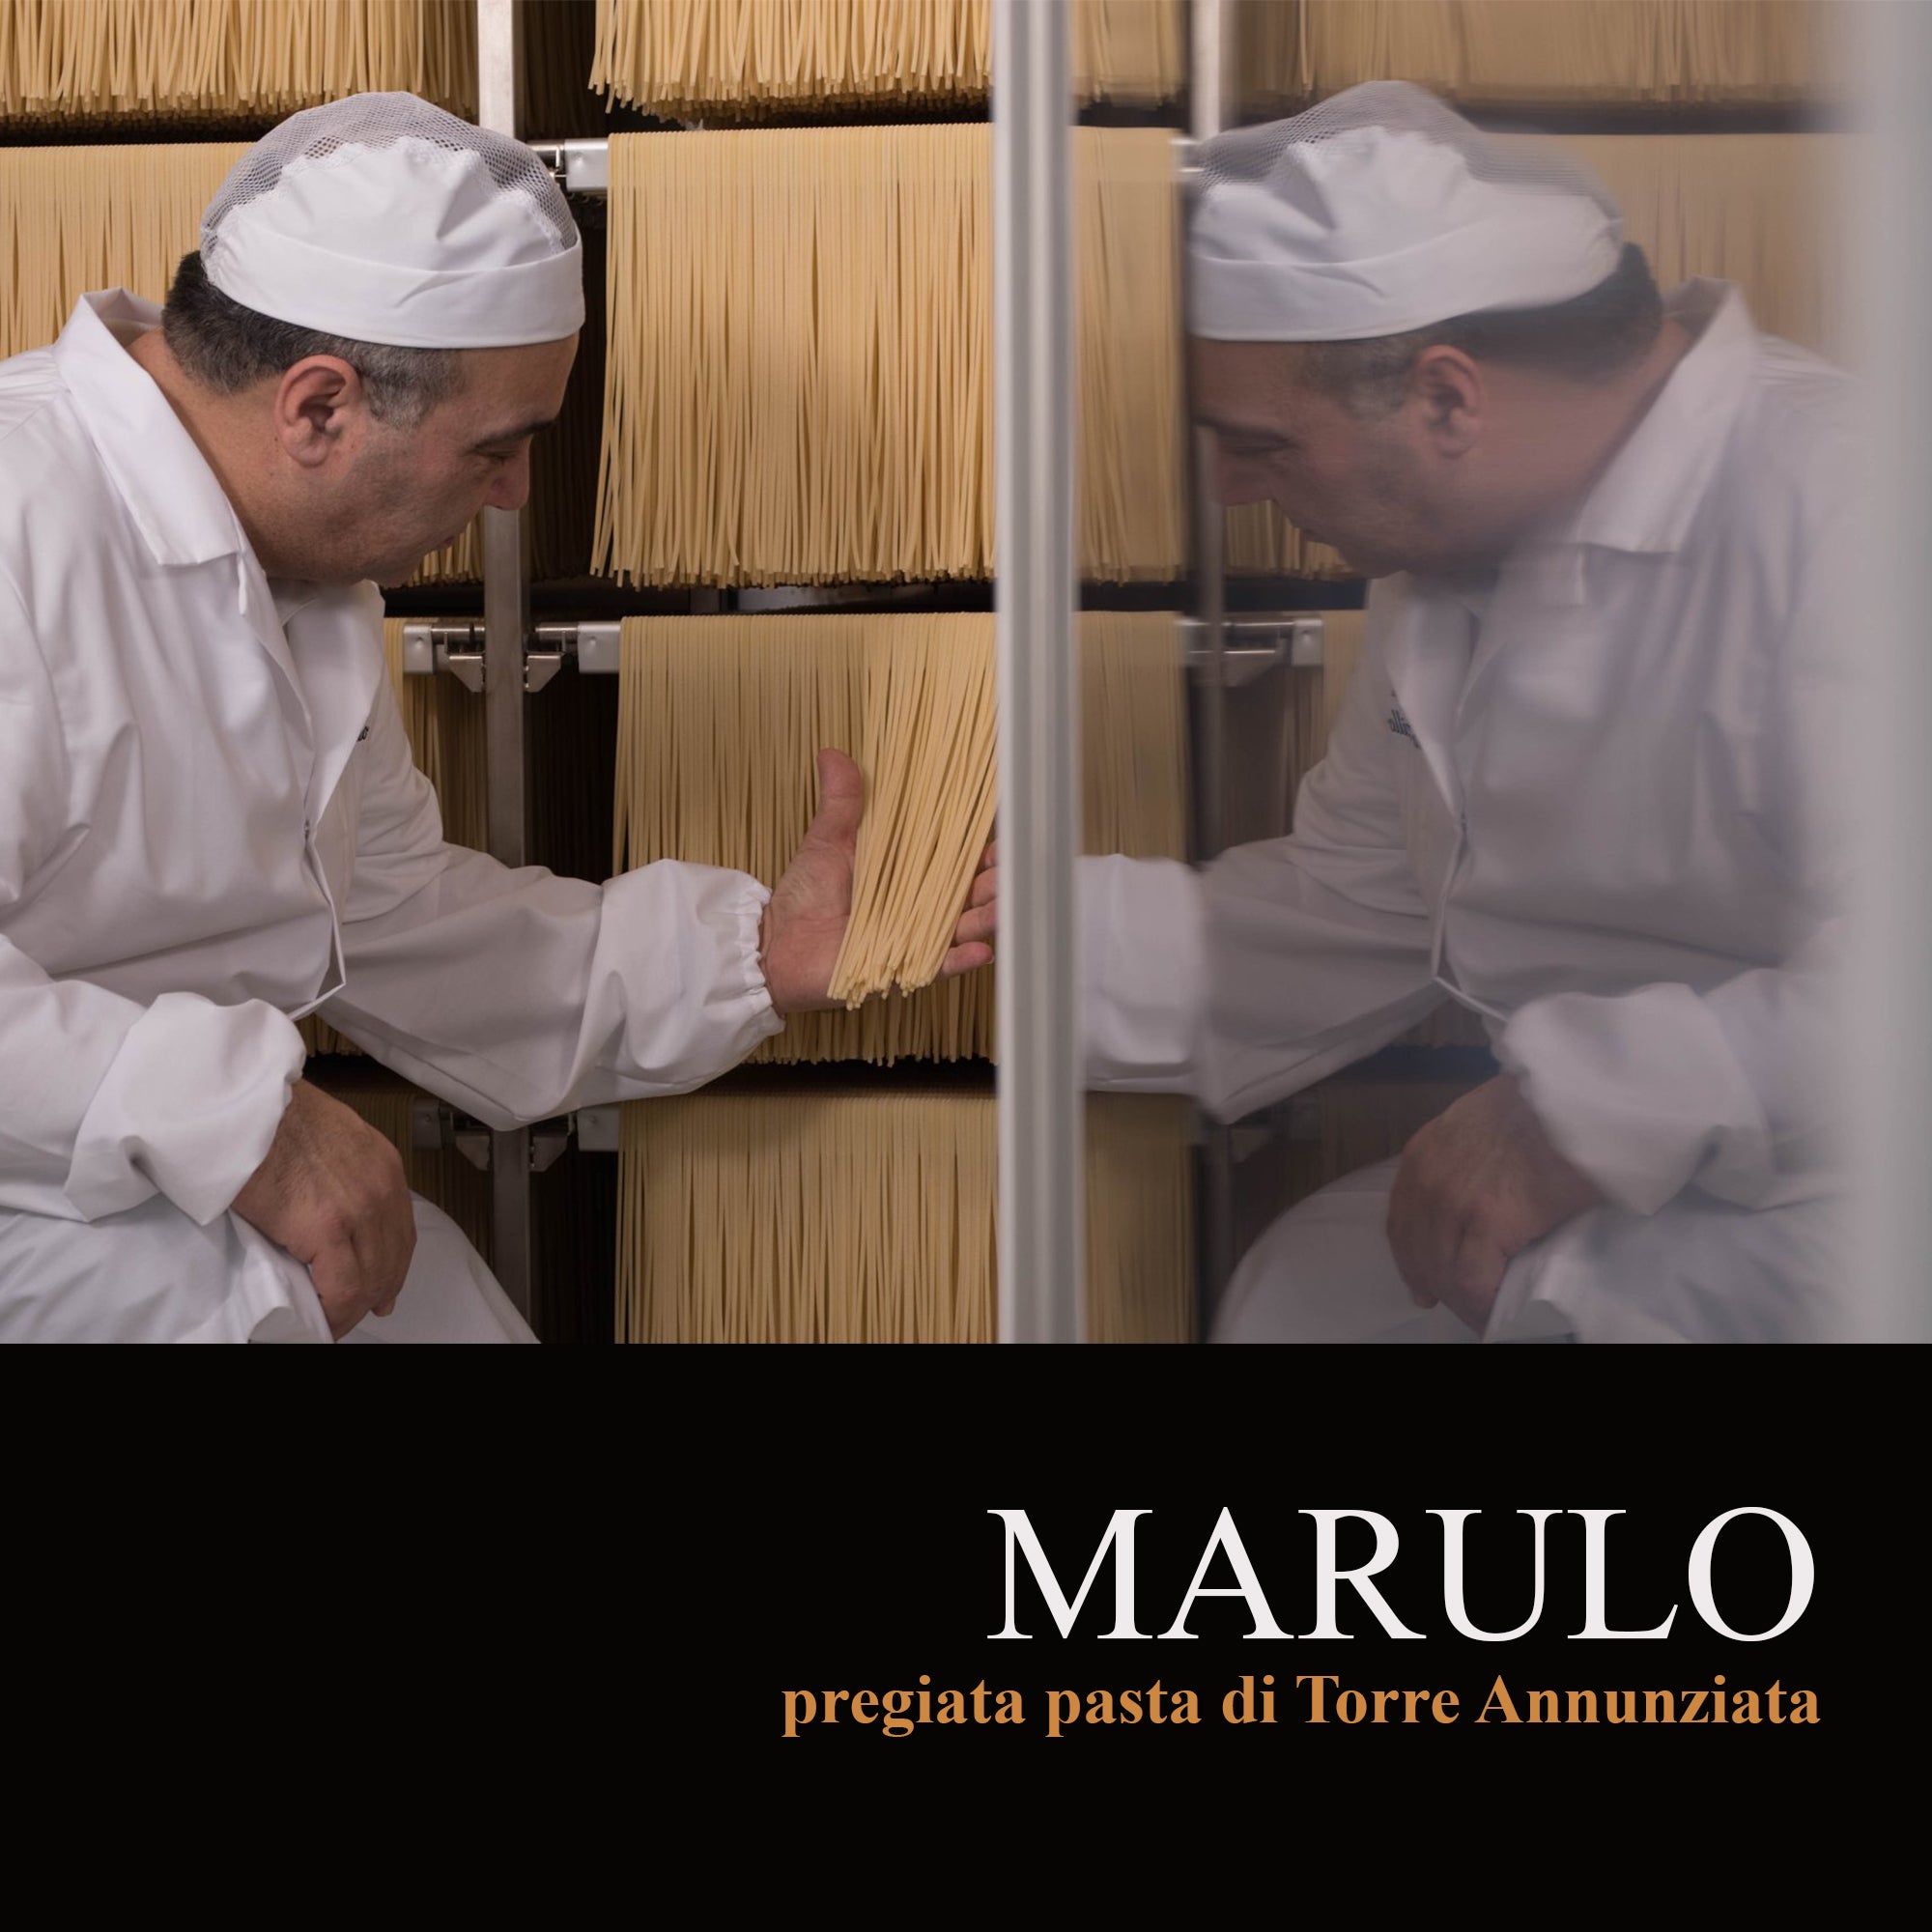 Marulo Artisan Pasta | Homemade Pasta | Homemade Italian Pasta By Artisan Chefs | Bronze cut Artisan Pasta from Italy 